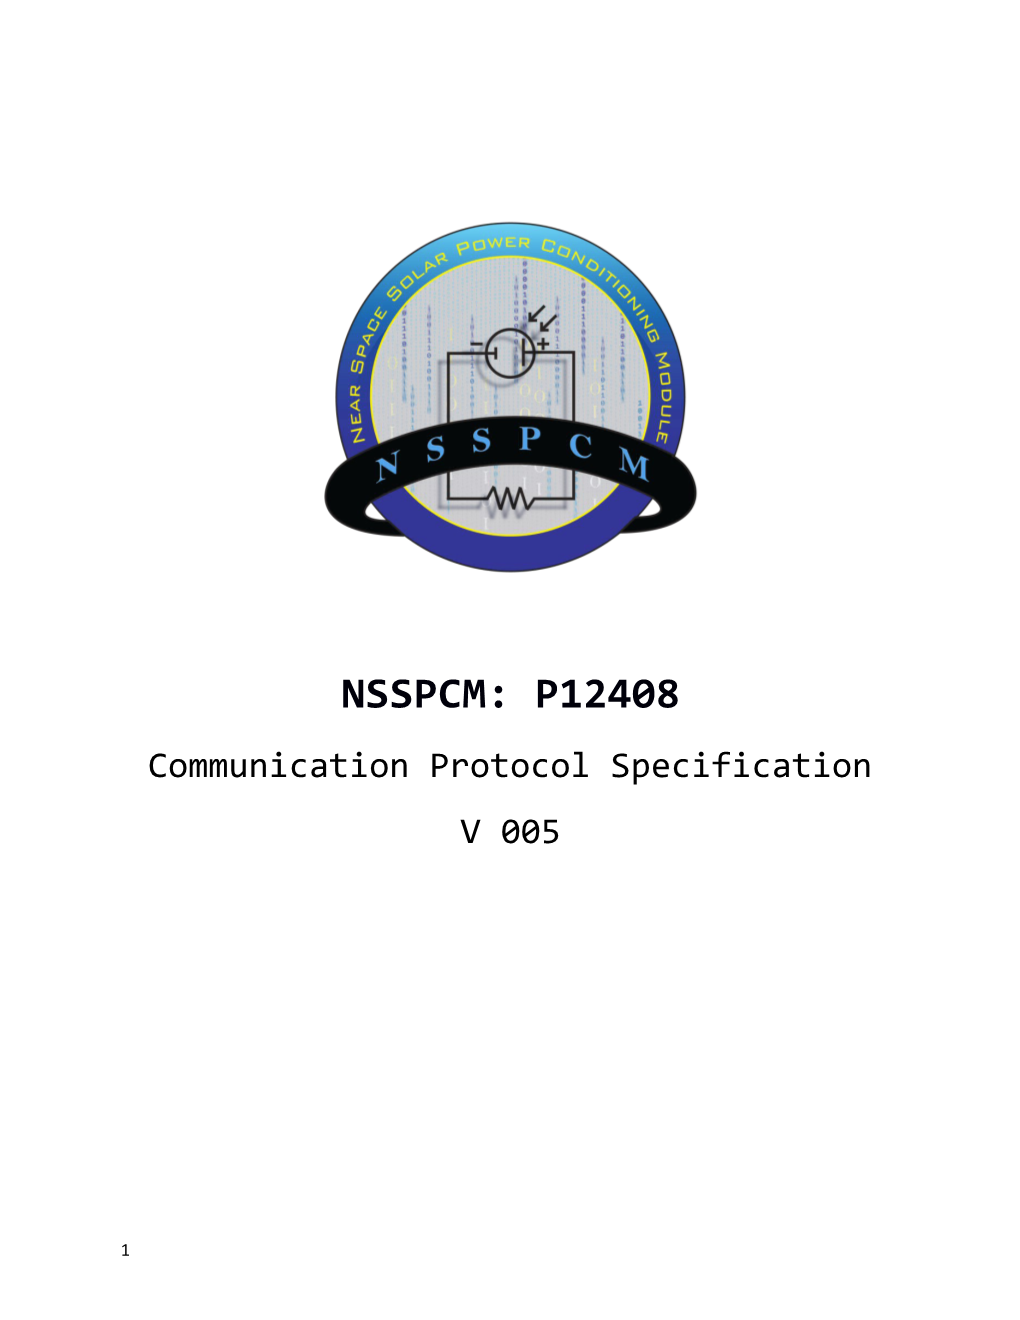 Communication Protocol Specification